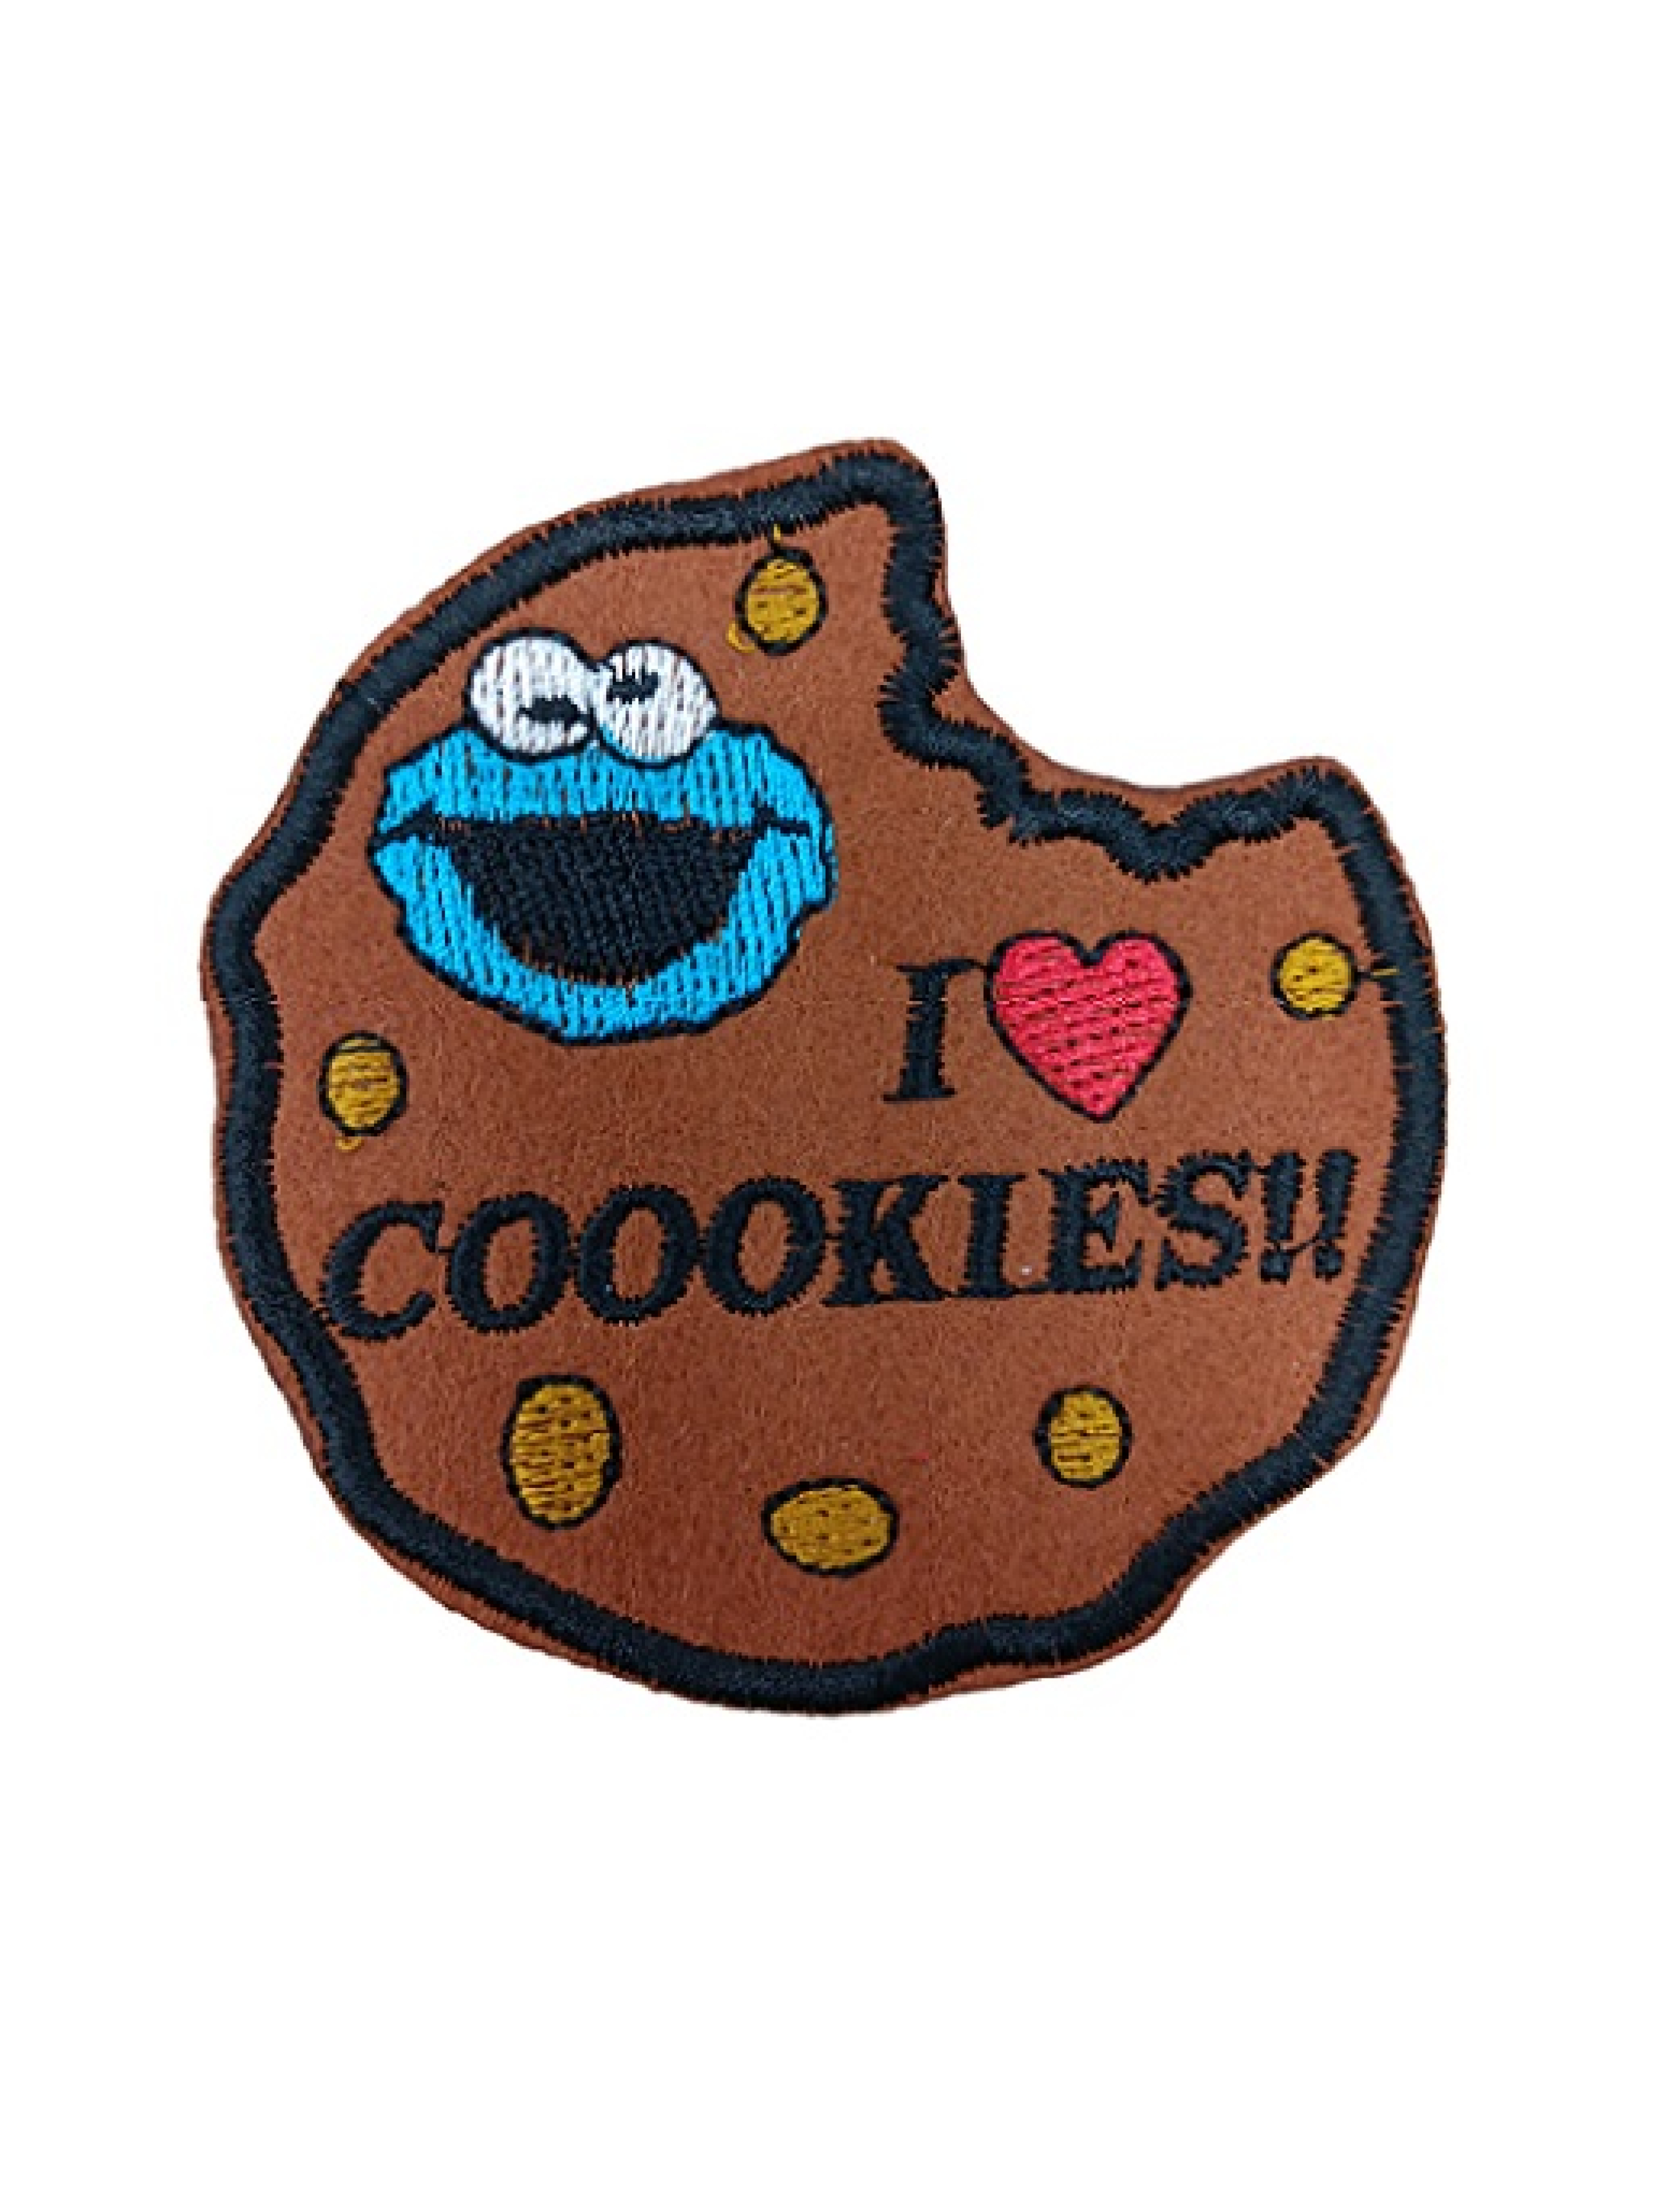 I love cookies!!